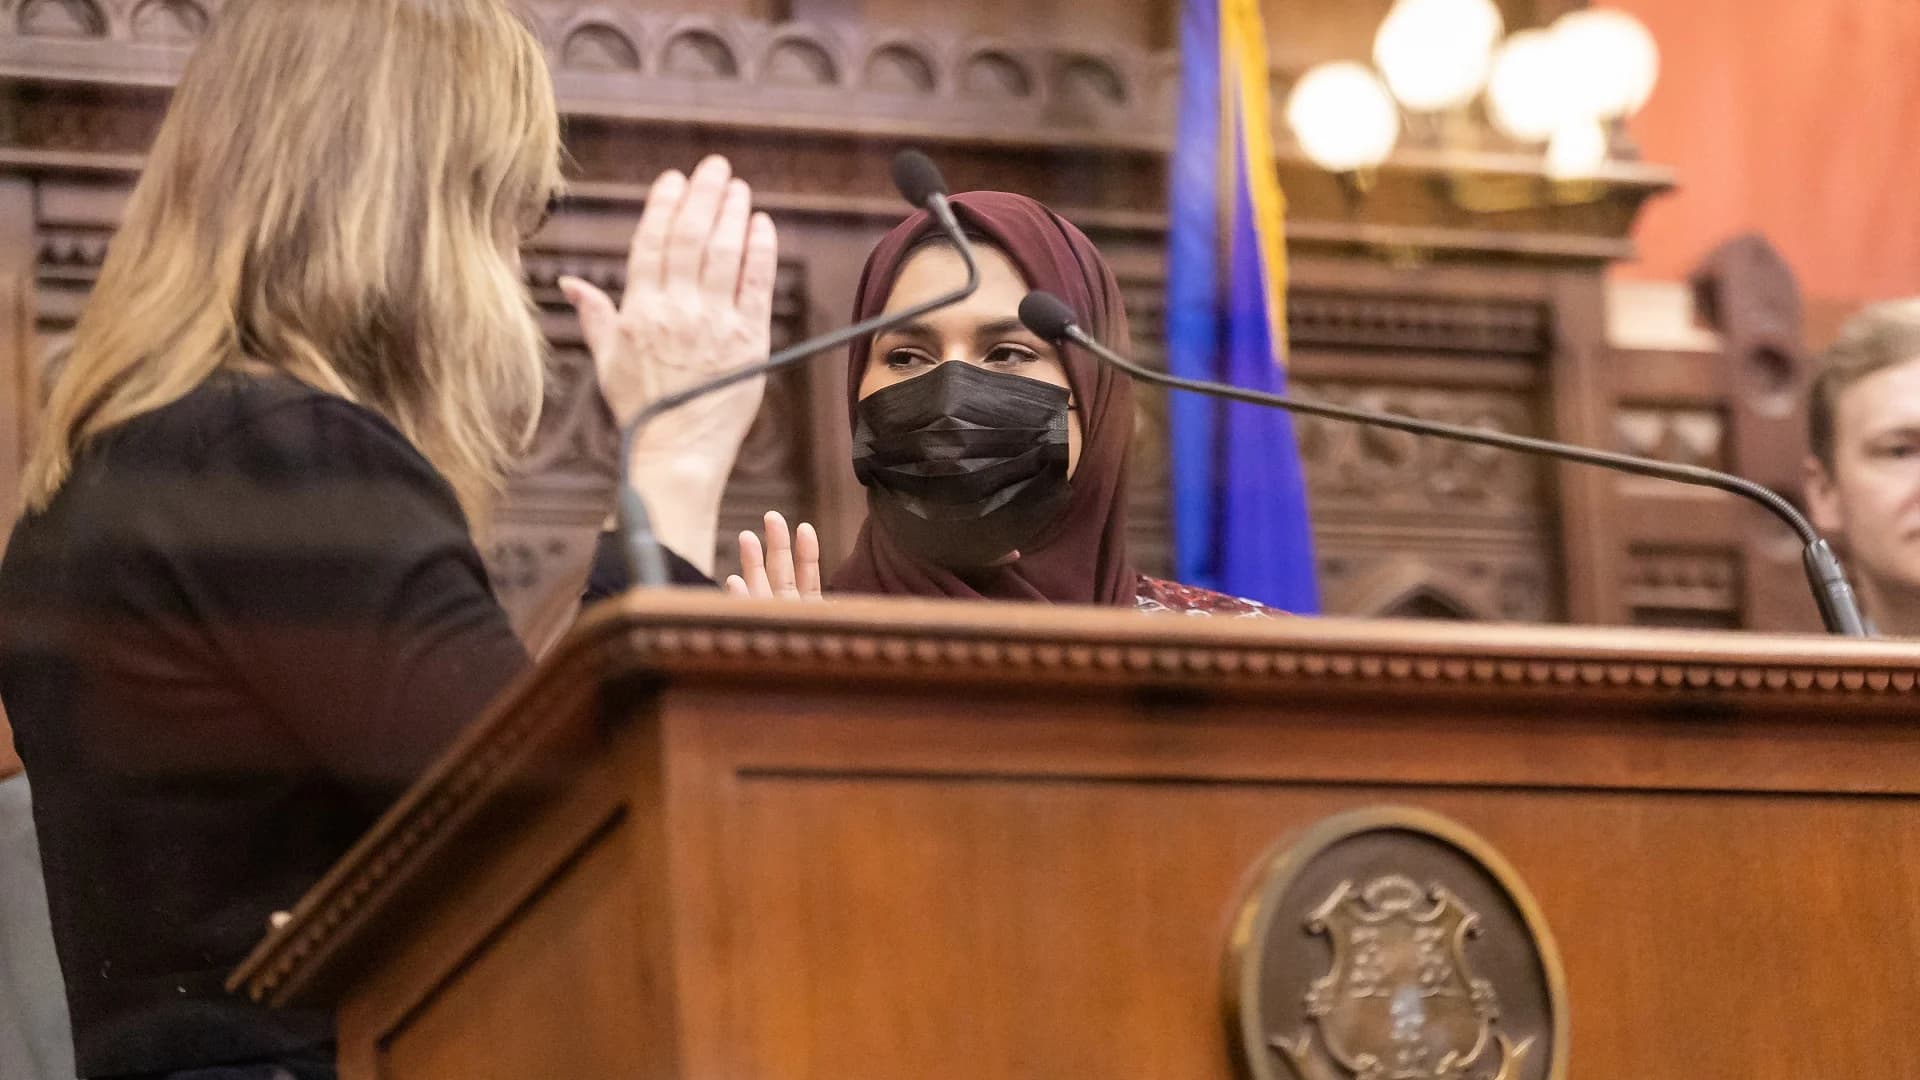 Rep. Khan sworn in as 1st Muslim member of Connecticut House